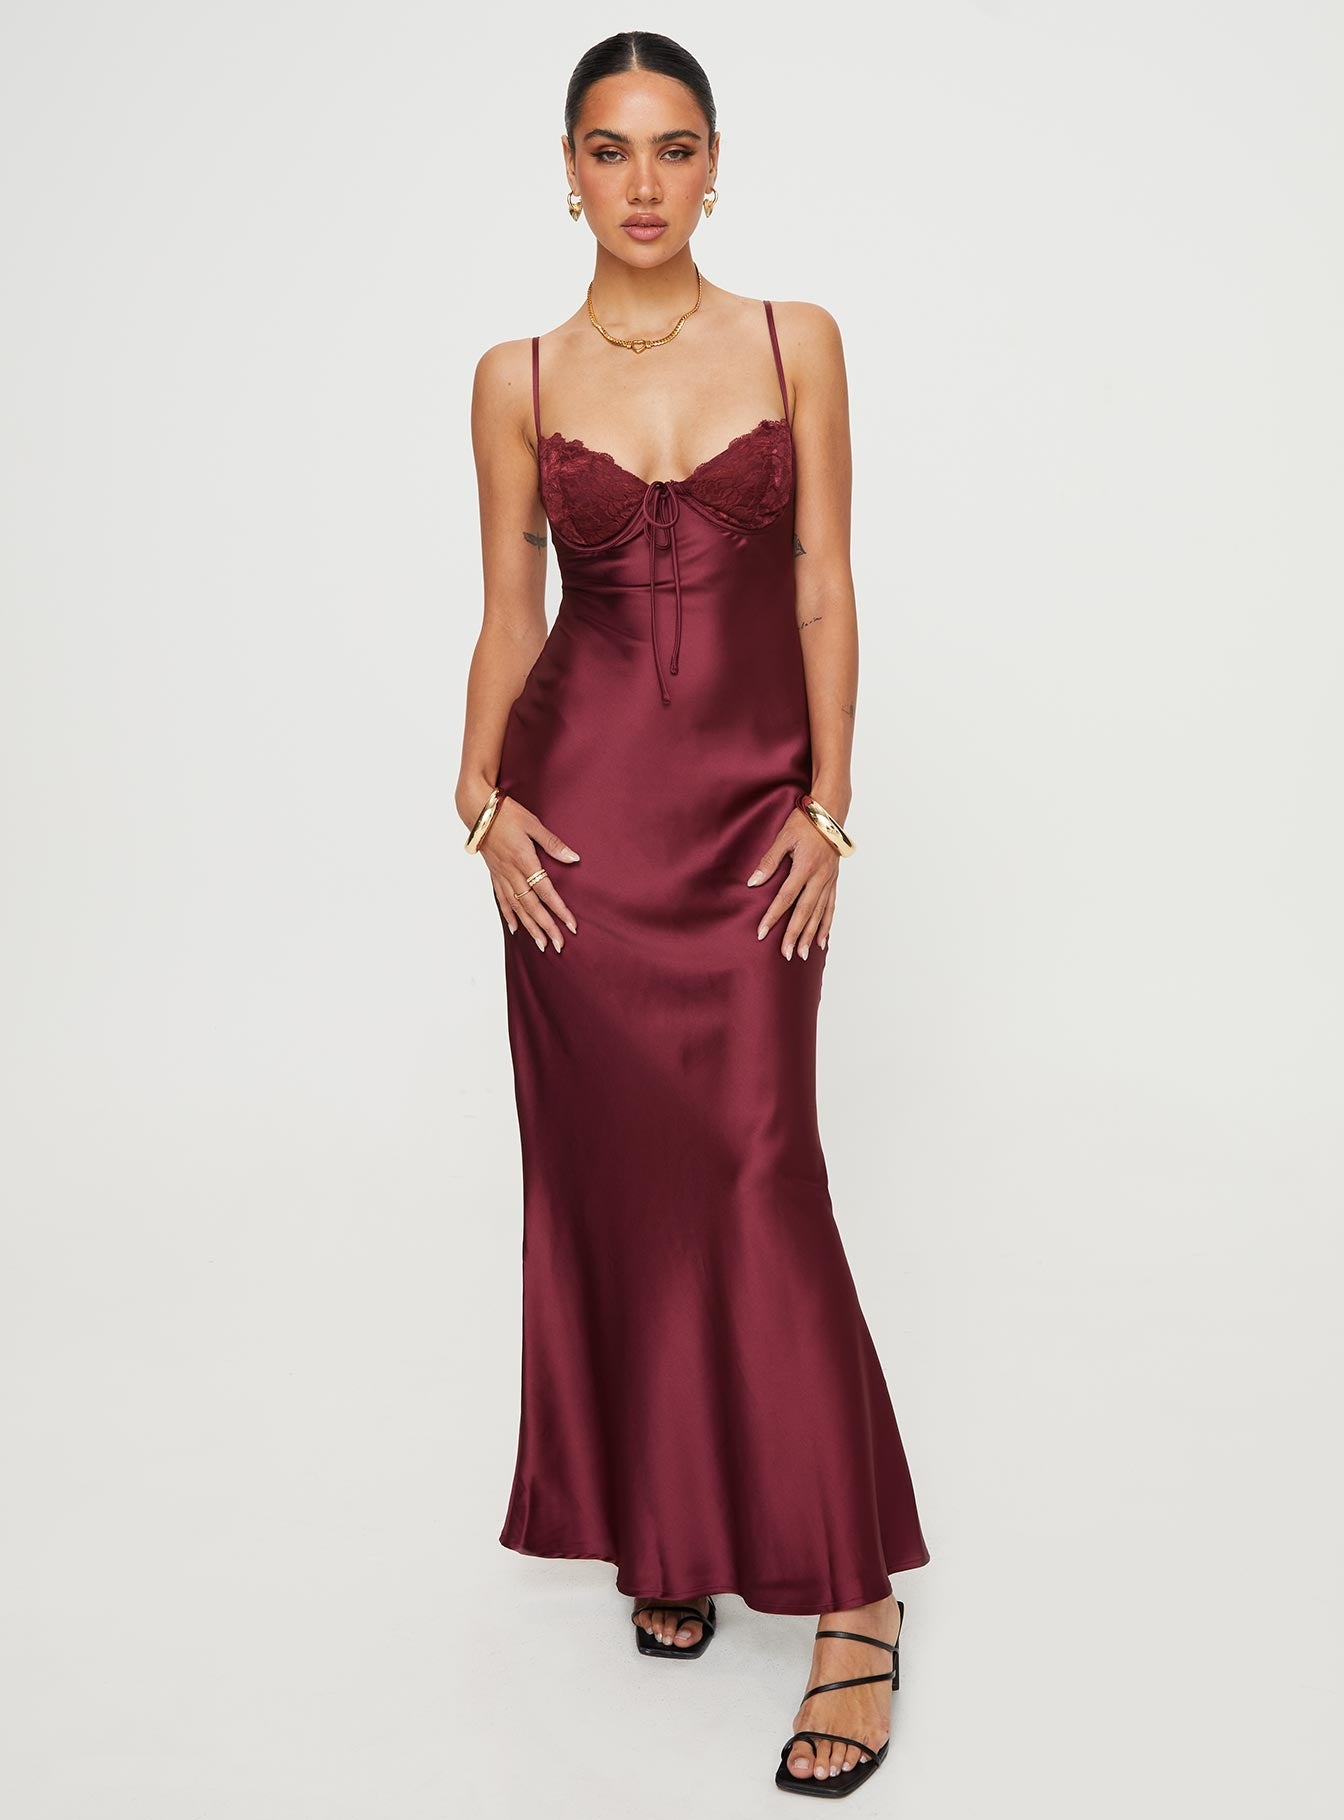 Shop Formal Dress - Fadyen Bias Cut Maxi Dress Burgundy sixth image